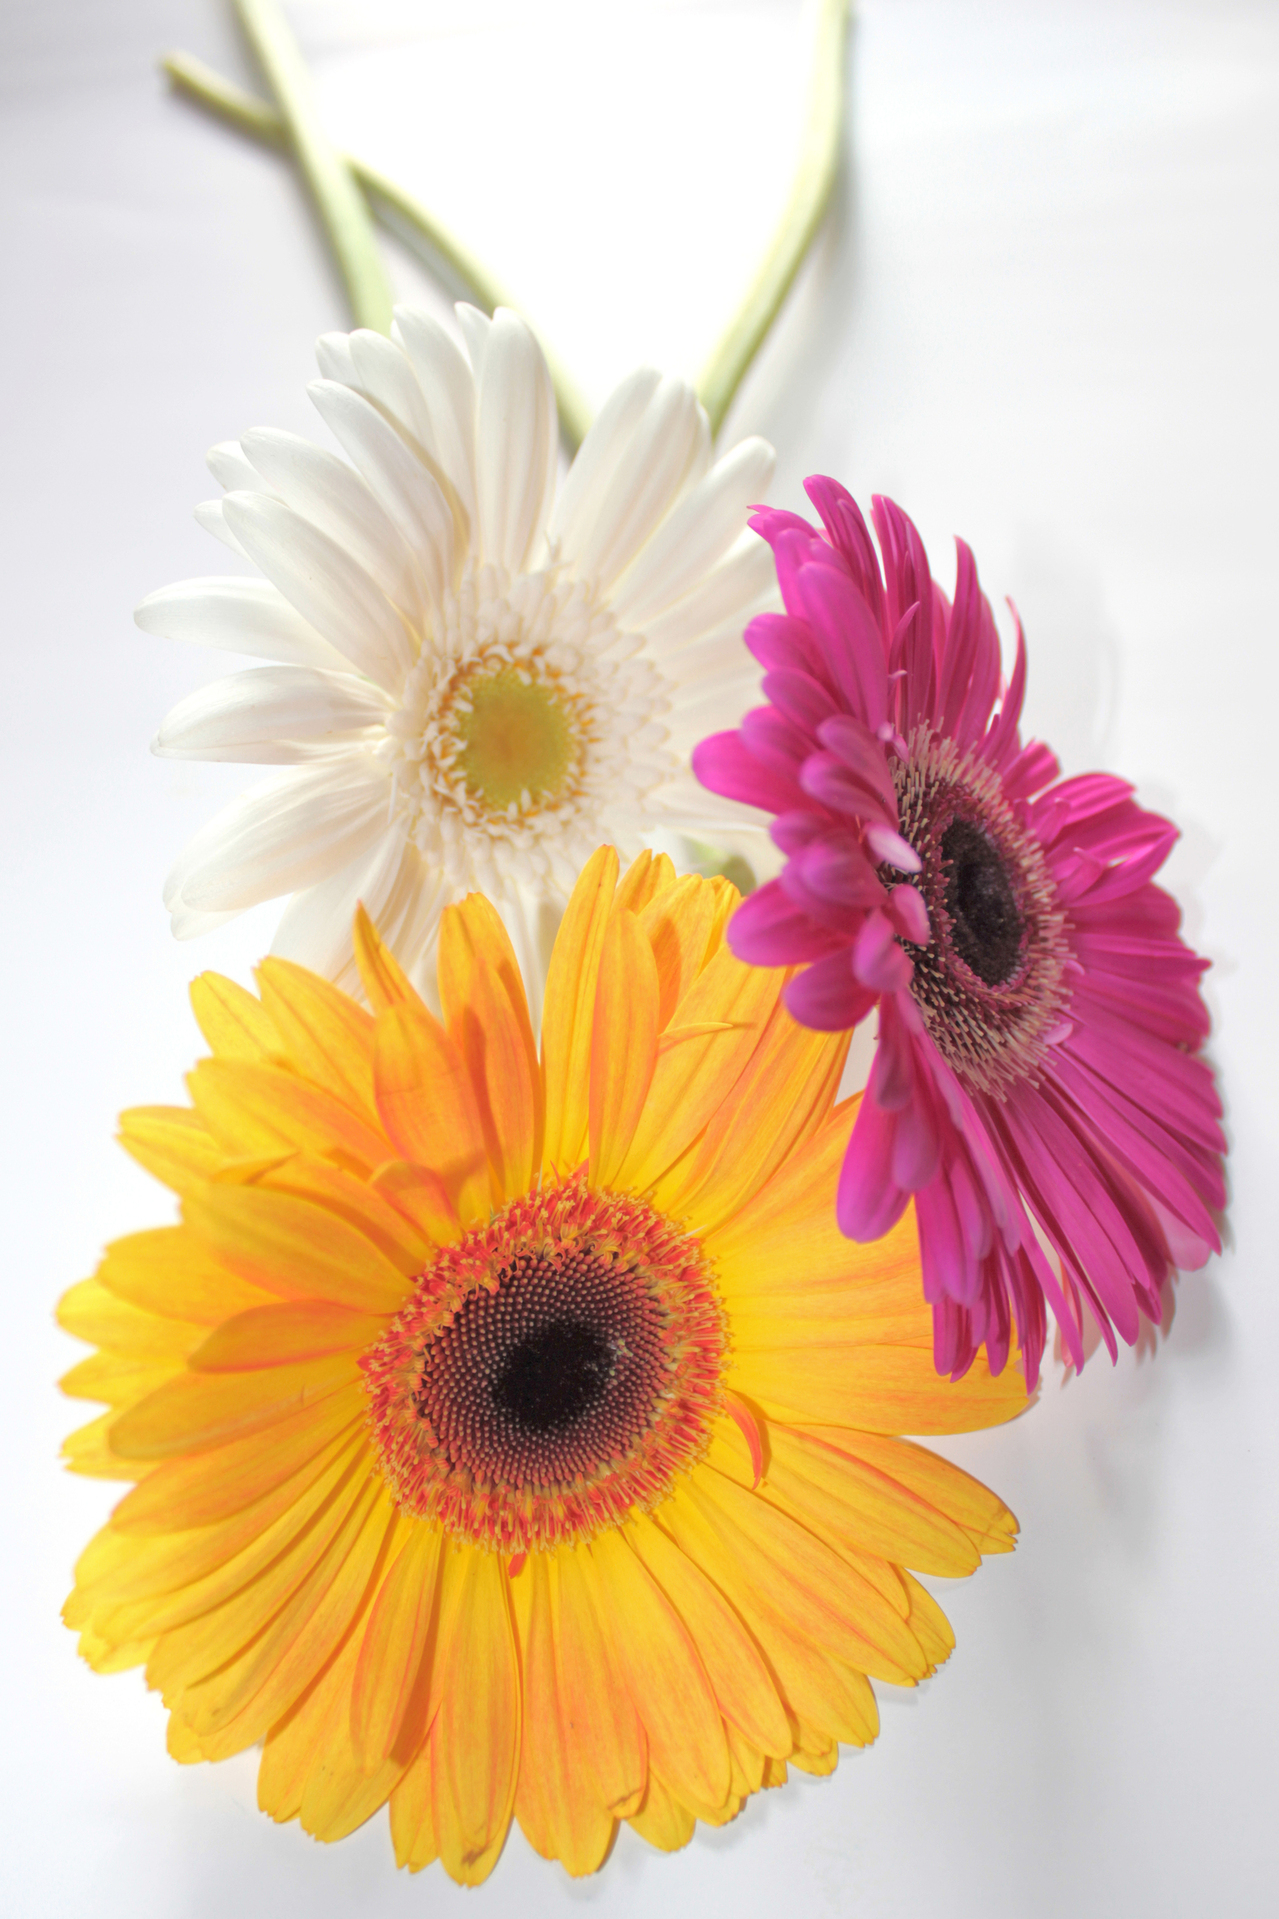 Interesting facts about Gerbera Daisies - Flower PressFlower Press